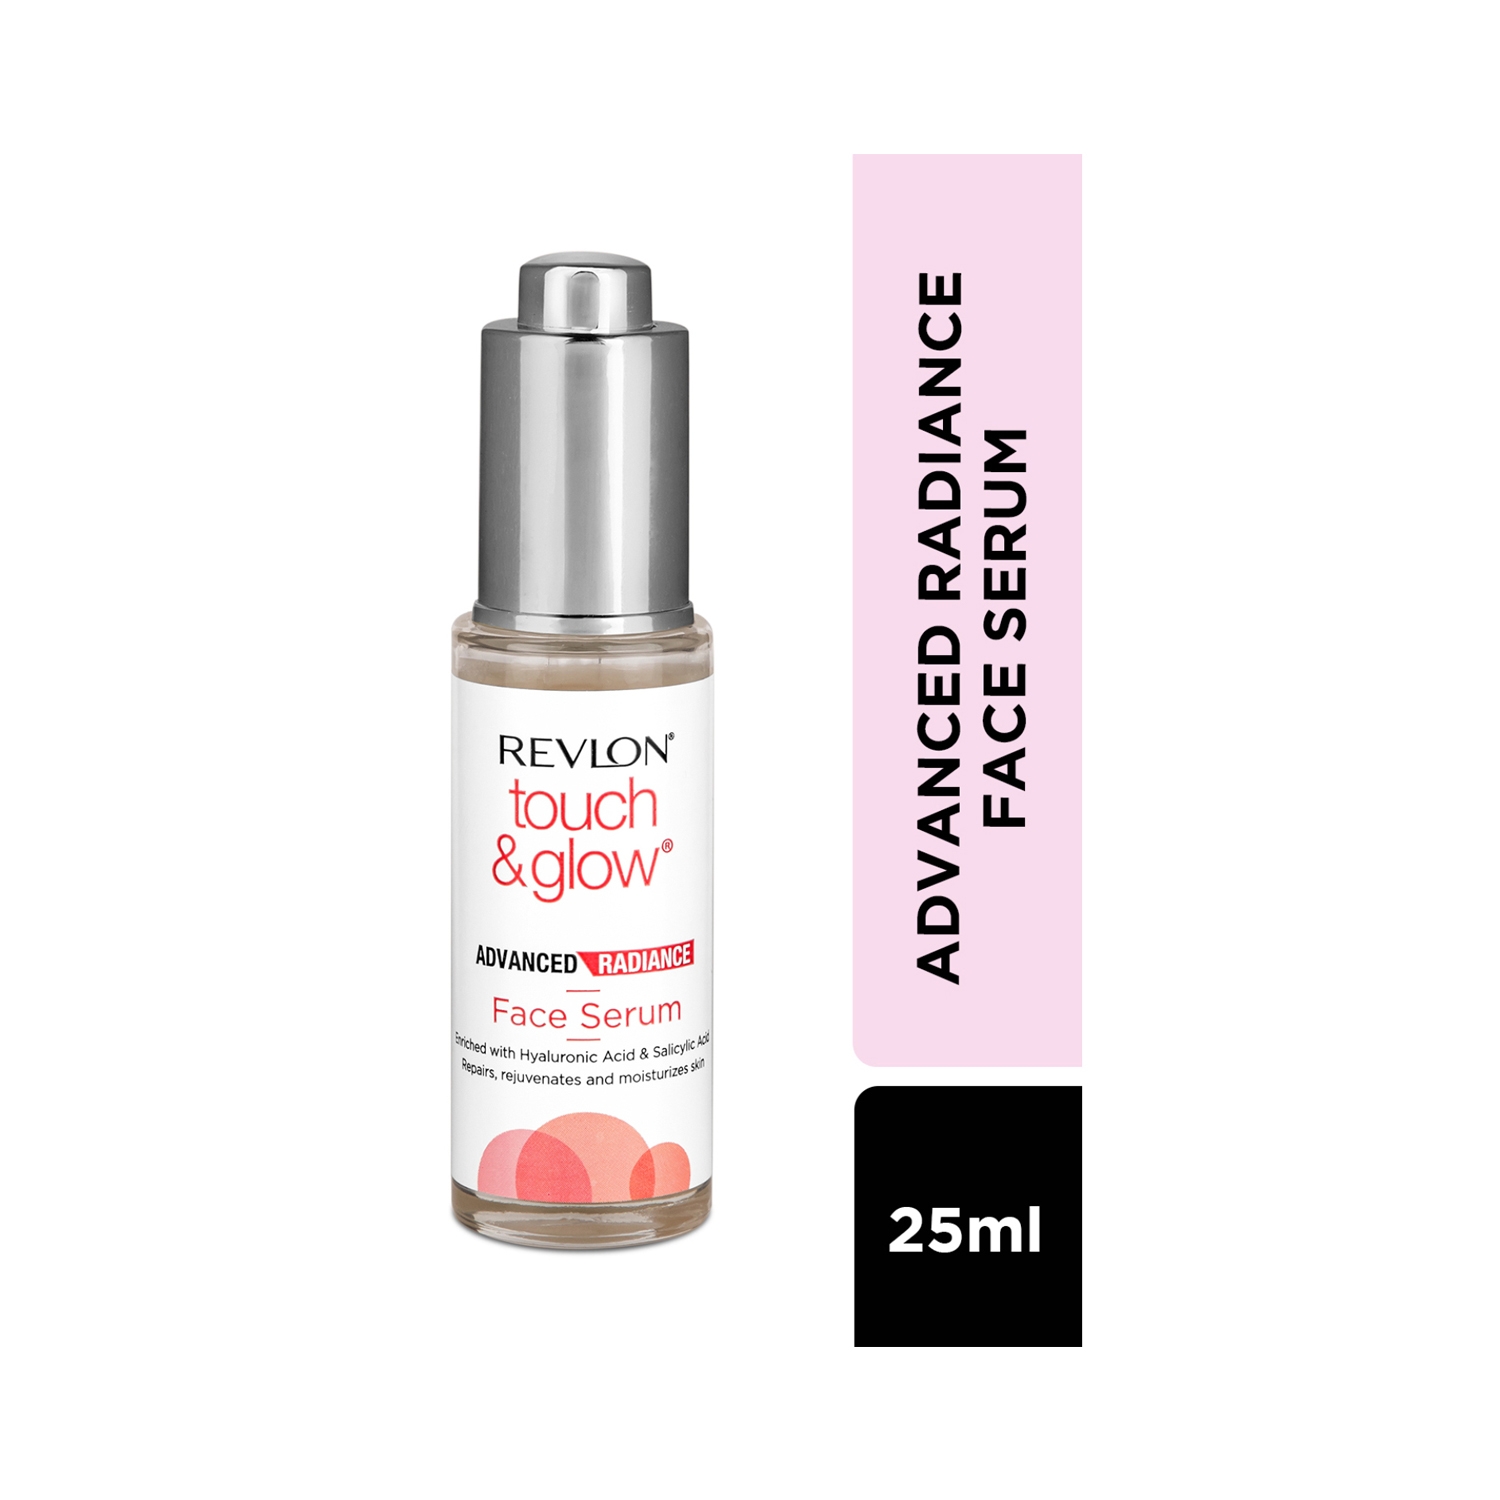 Revlon | Revlon Touch & Glow Advanced Radiance Face Serum (25ml)